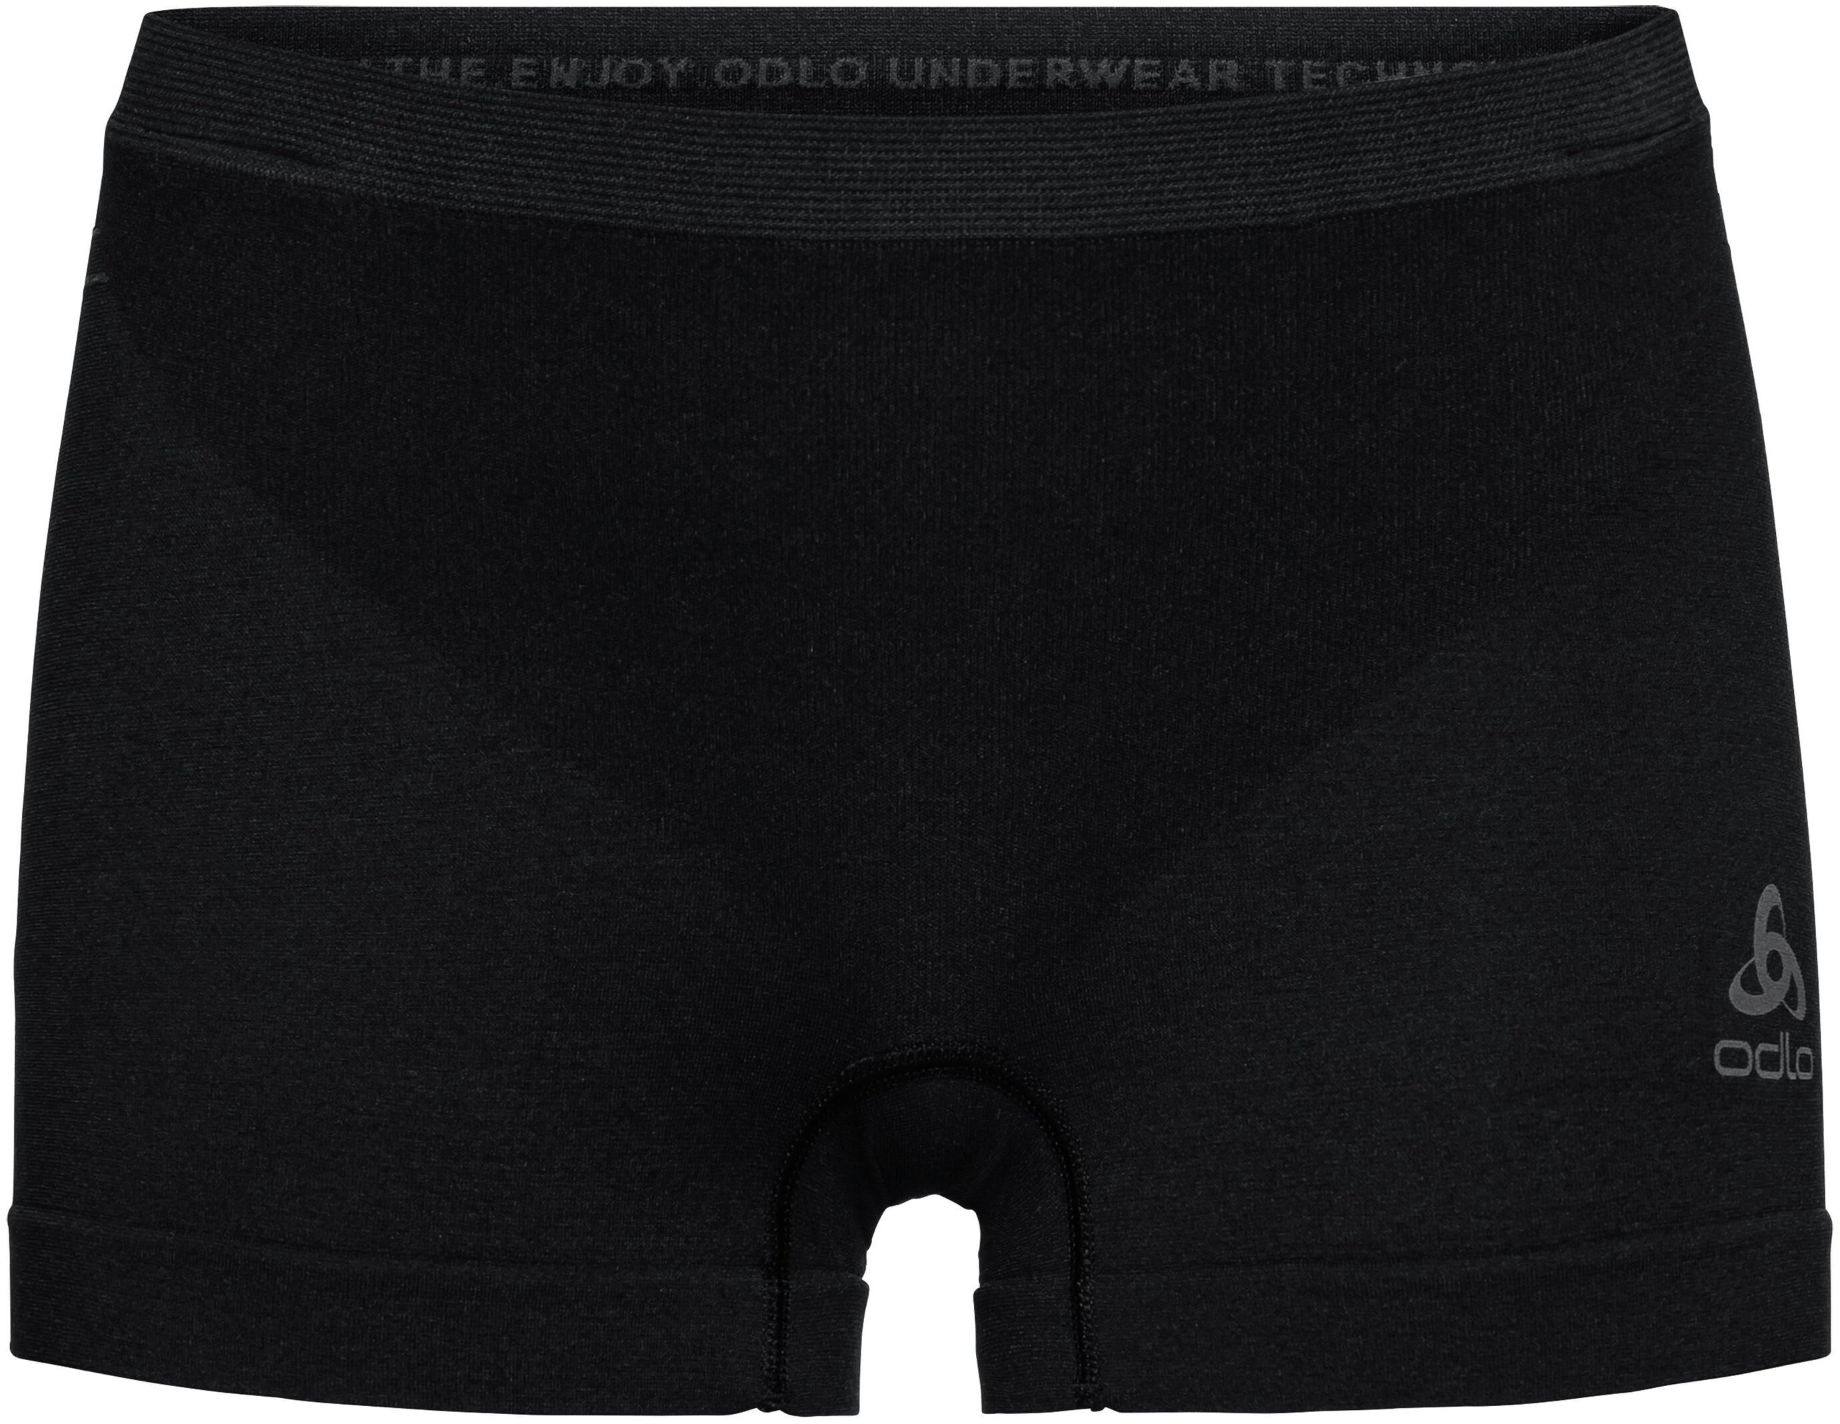 Women’s Performance Light Sports-Underwear Panty Black S